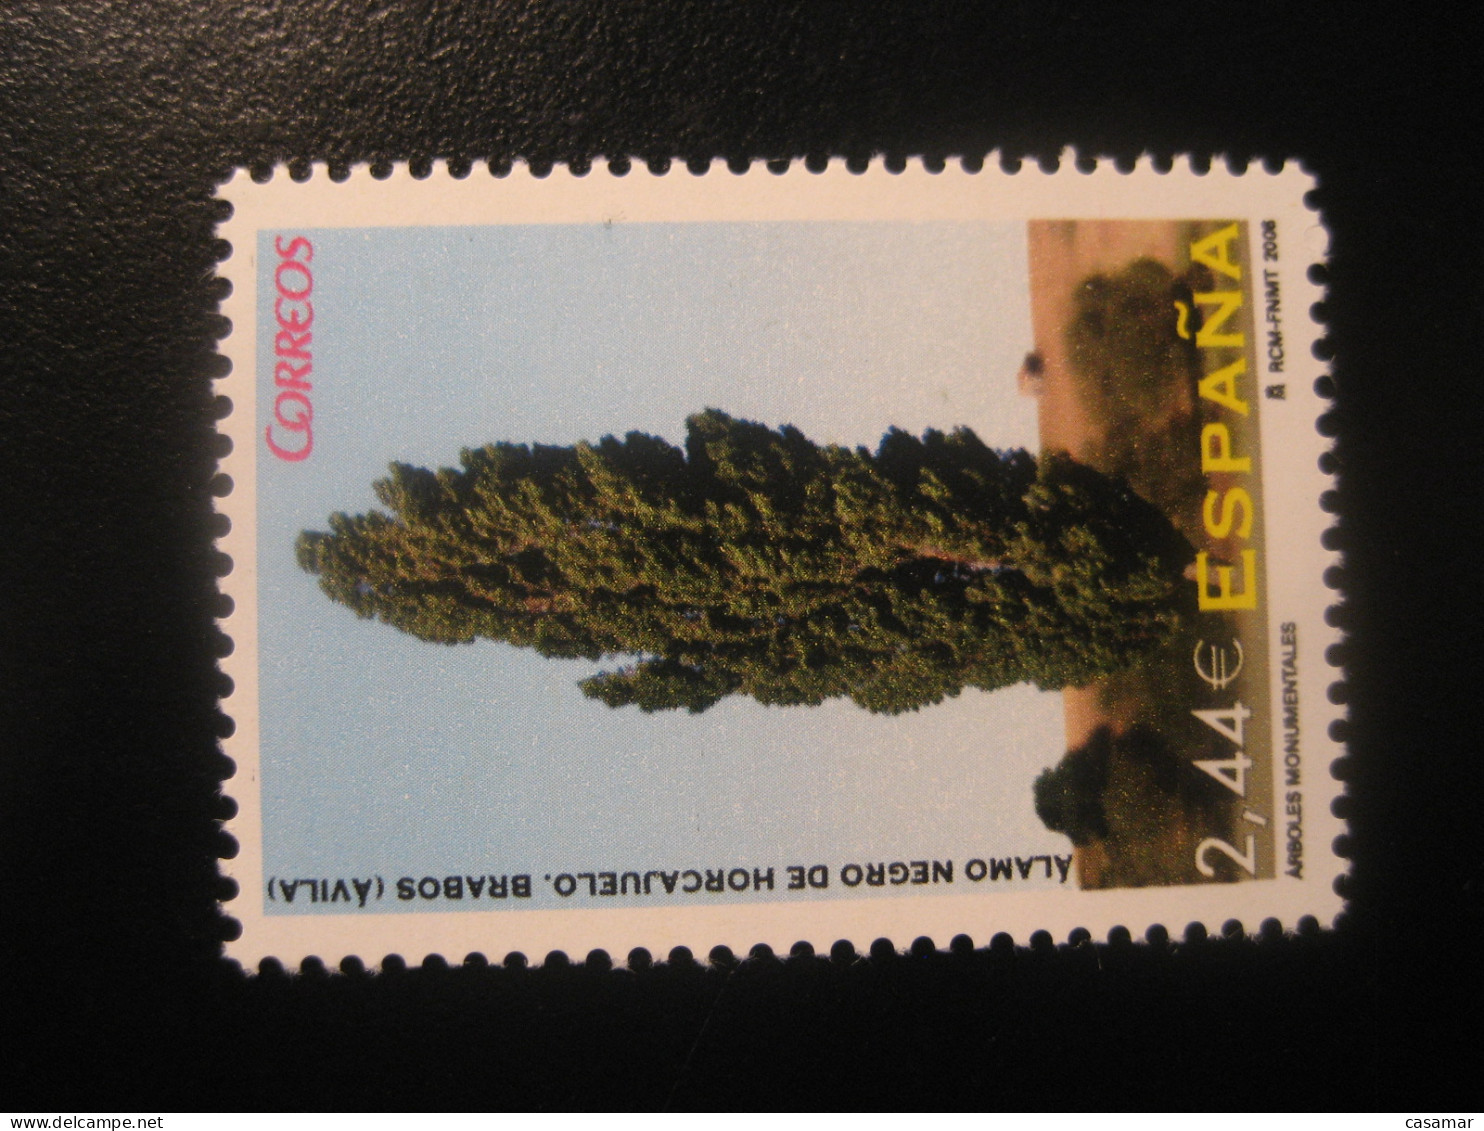 Edifil 4390 ** Unhinged Facial 2,44 Eur Stamp 2008 ALAMO NEGRO De Horcajuelo Brabos Avila Tree Arbre SPAIN - Trees